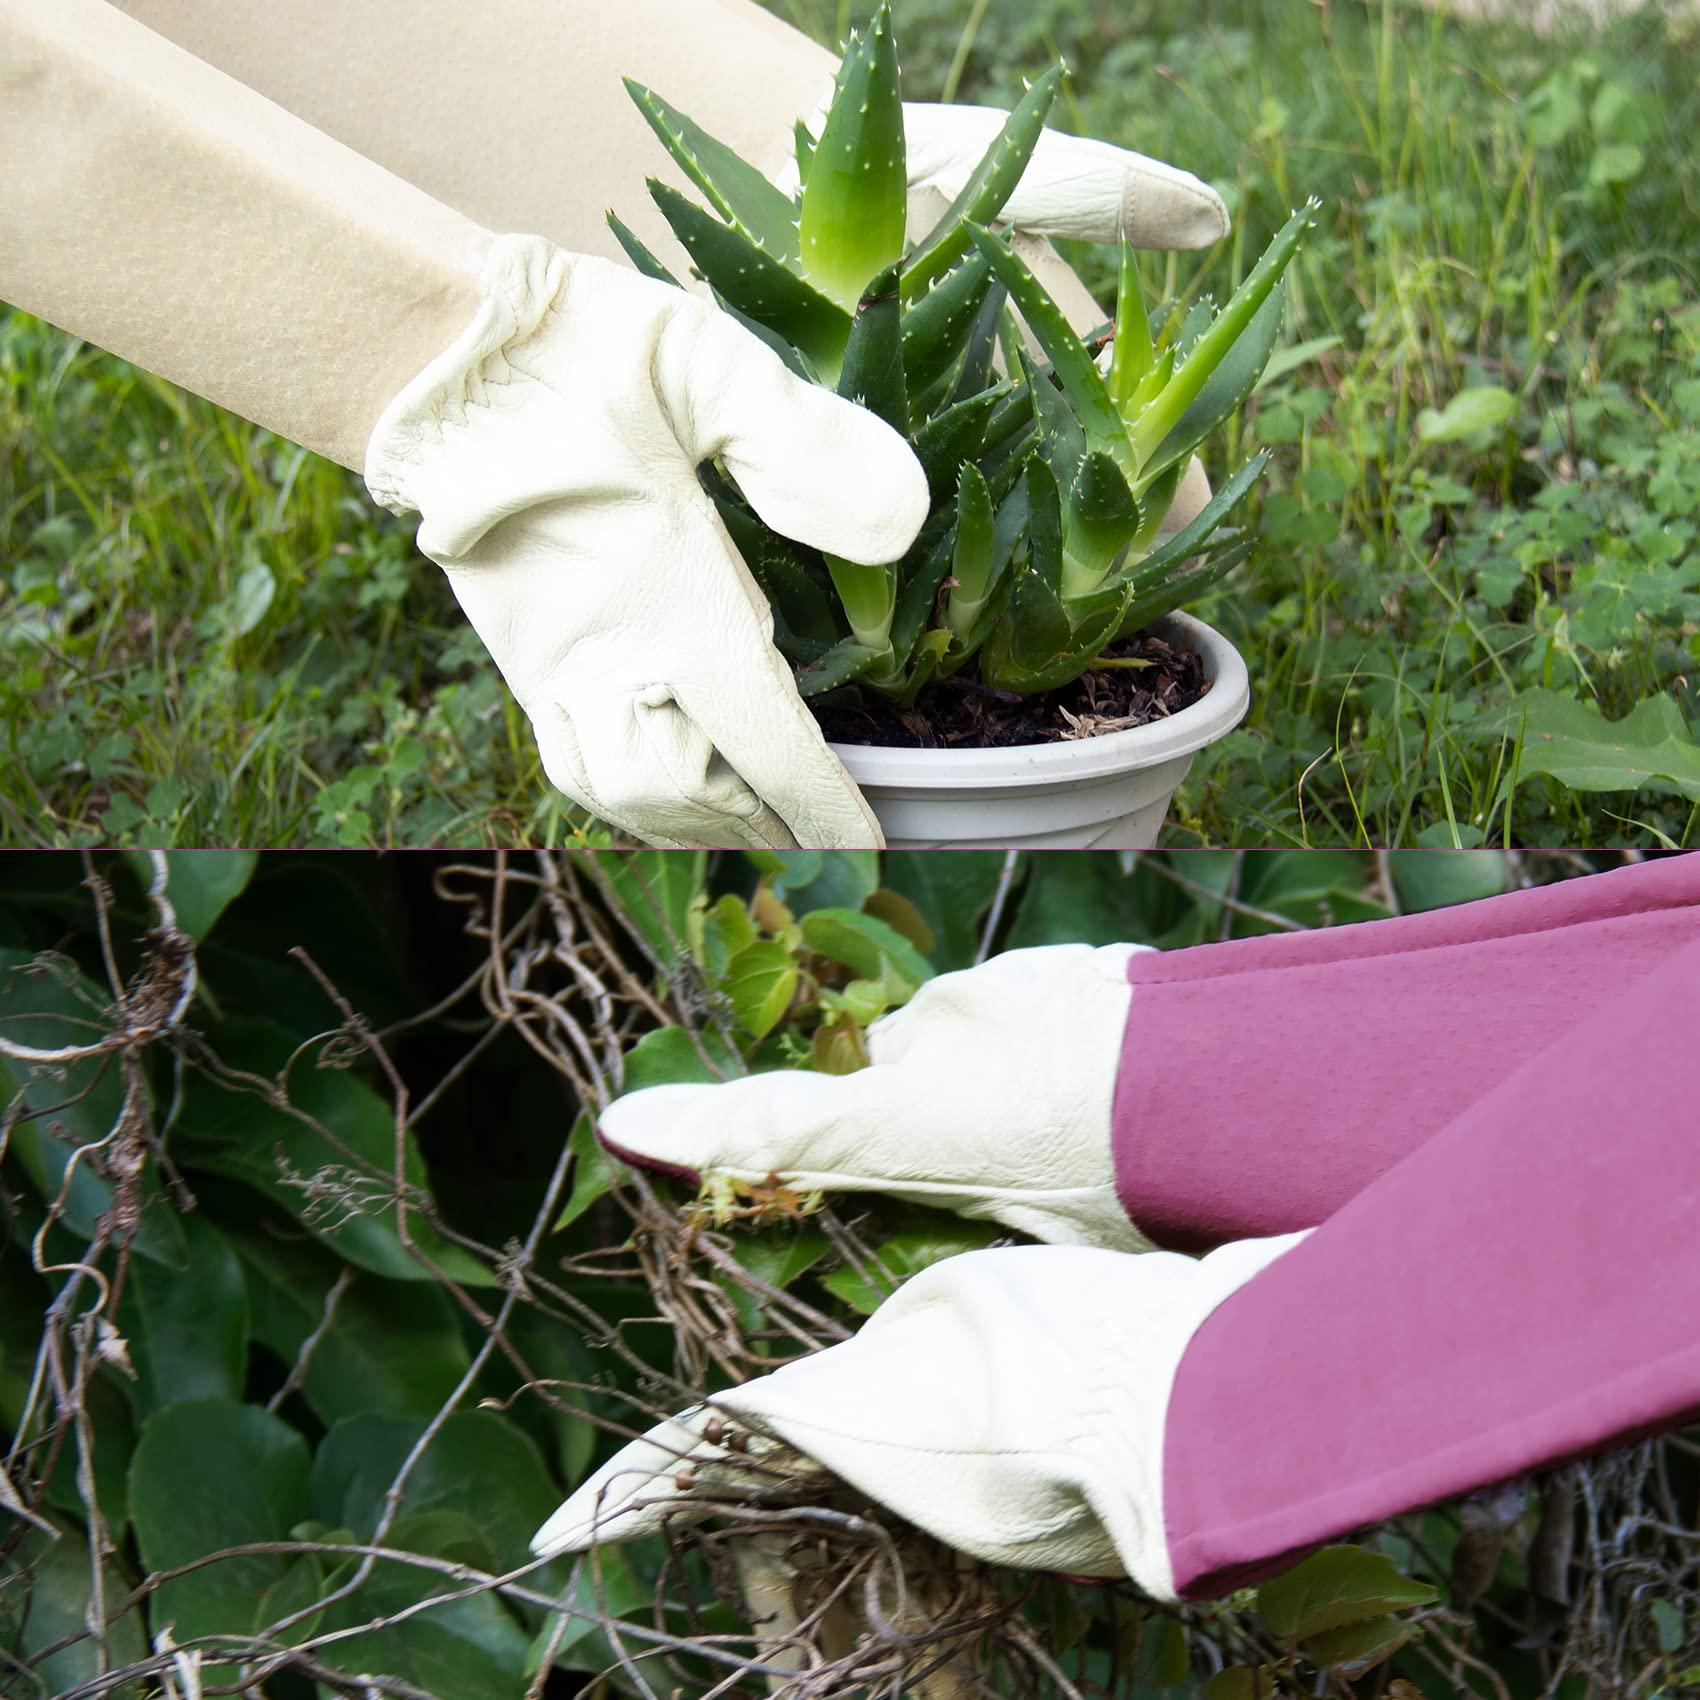 AIGEVTURE Rose Pruning Gloves Long Sleeve Thorn Proof,Rose Gardening Gloves for Men Women Long Gauntlet,Grain Pigskin Leather Pink(Large) 2